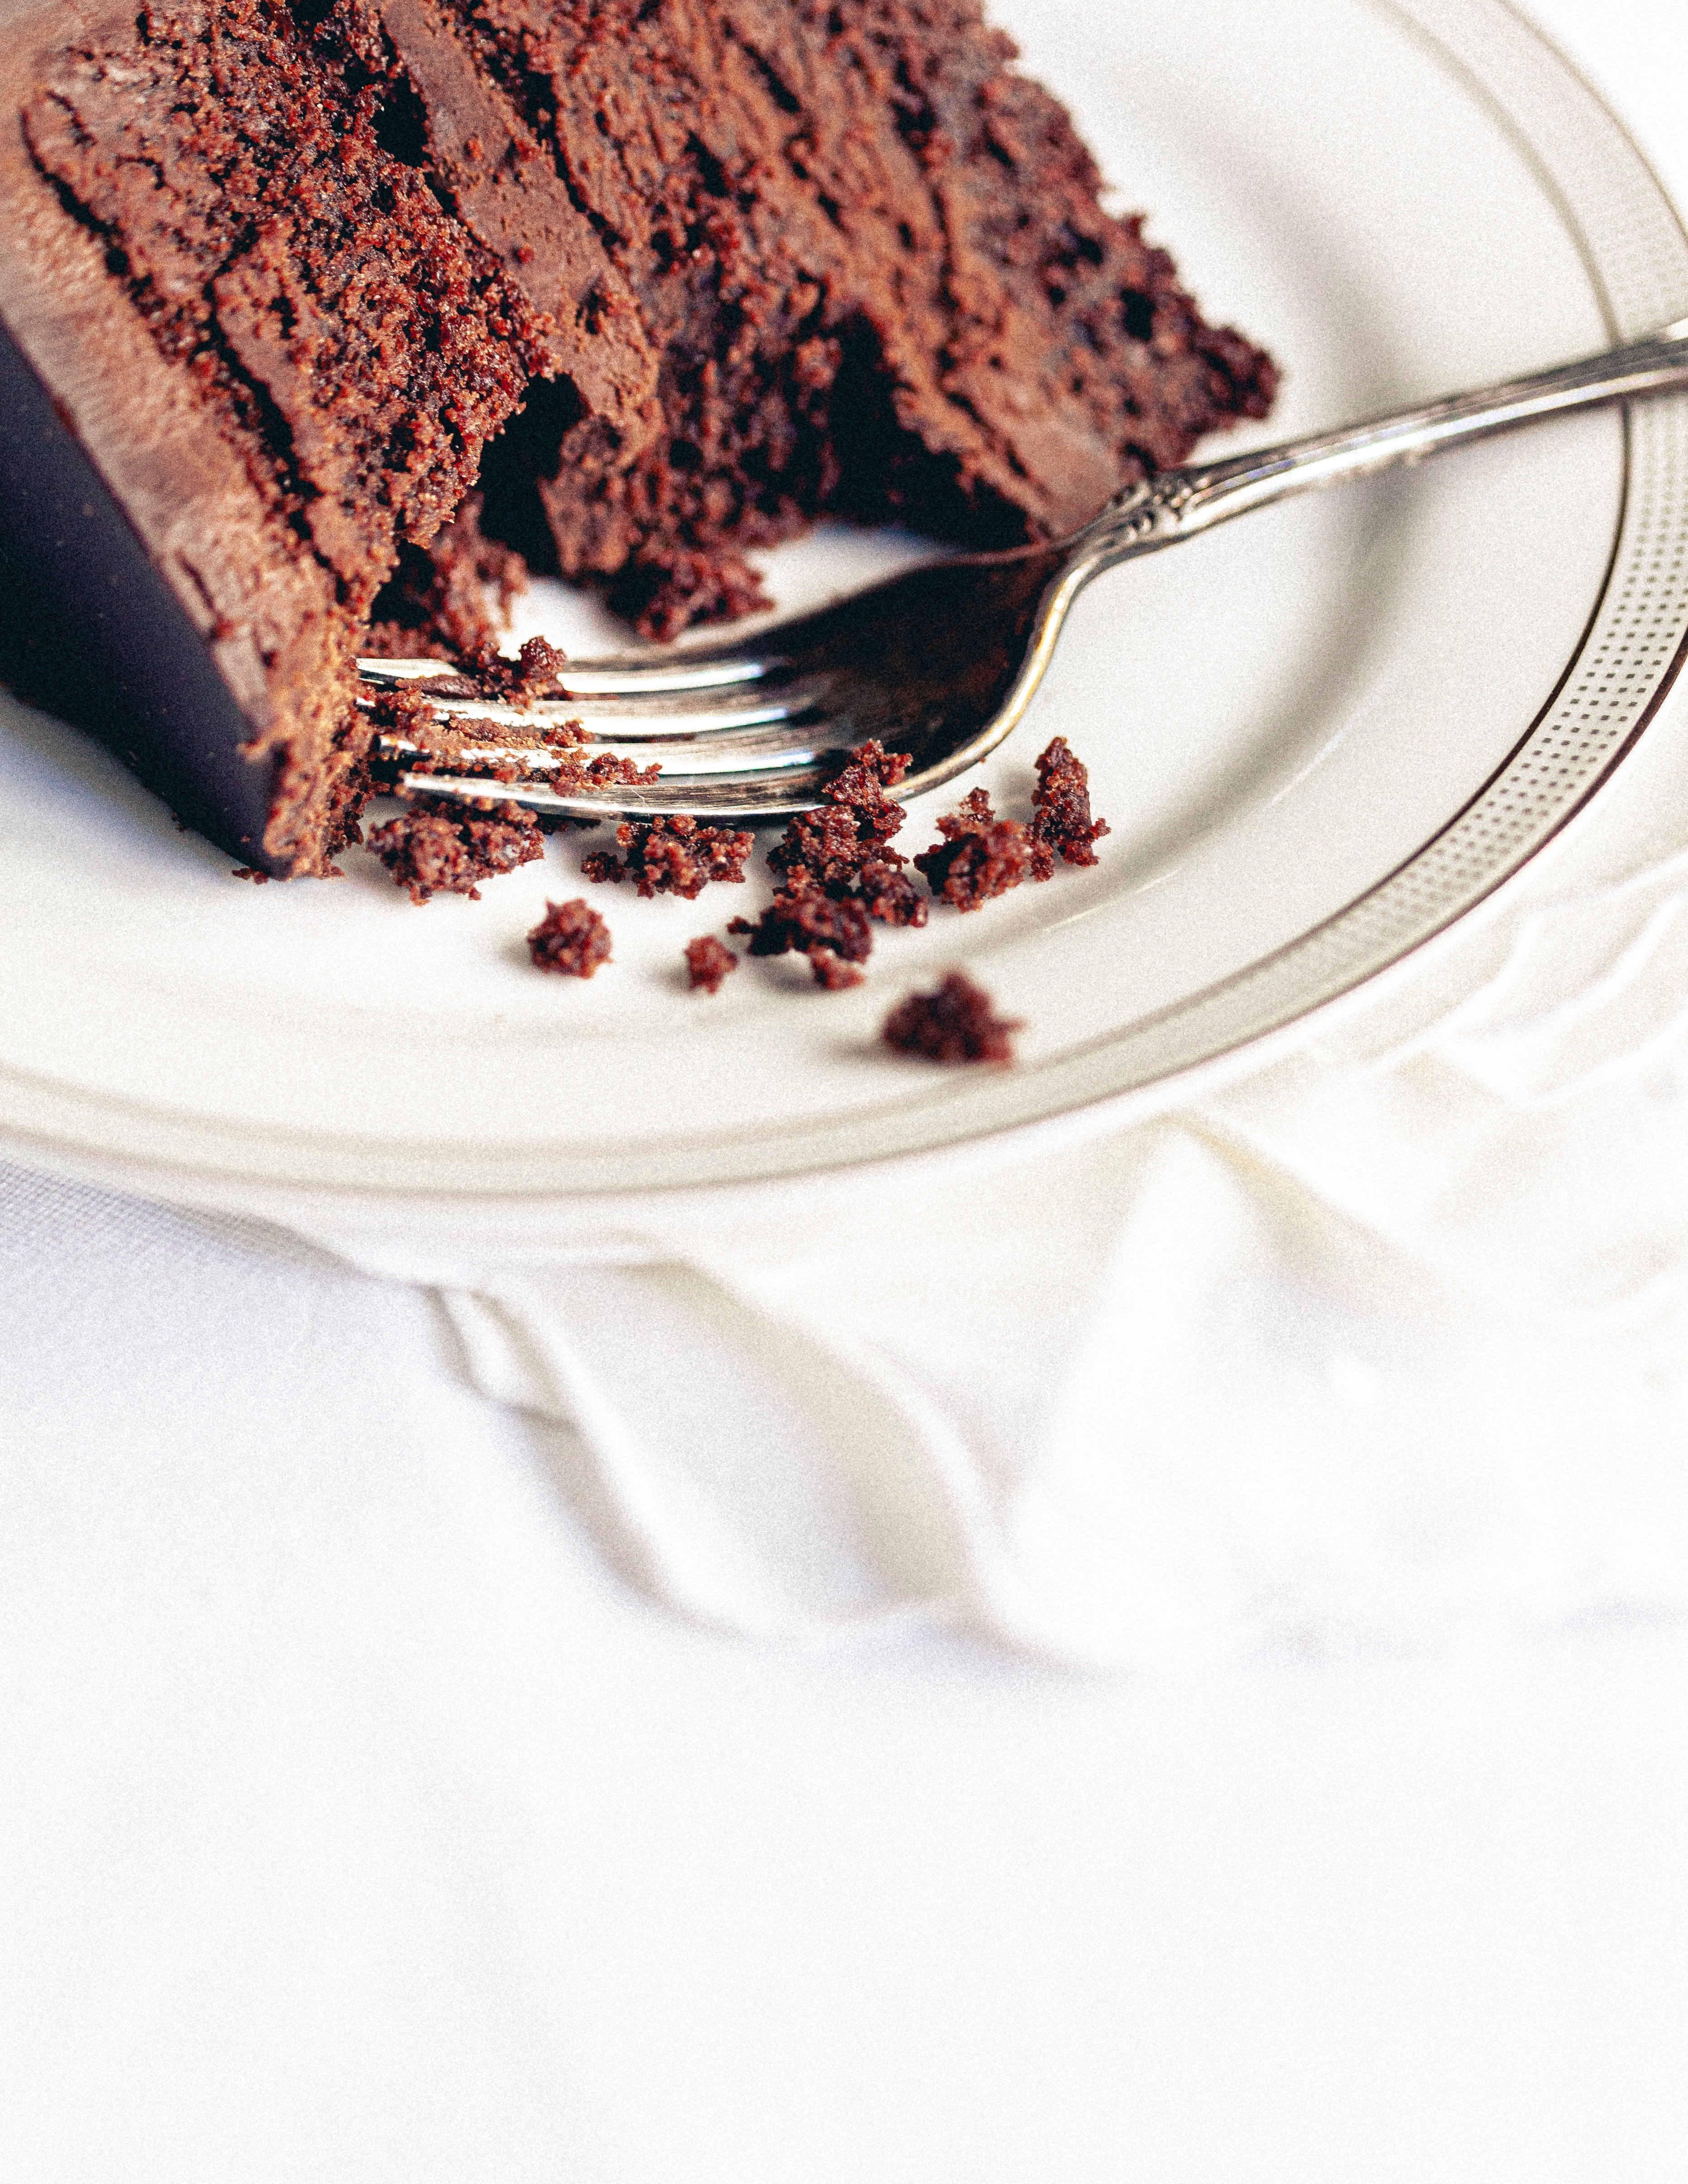 Mrs. Barlow gave Oliver chocolate cake. | Source: Unsplash